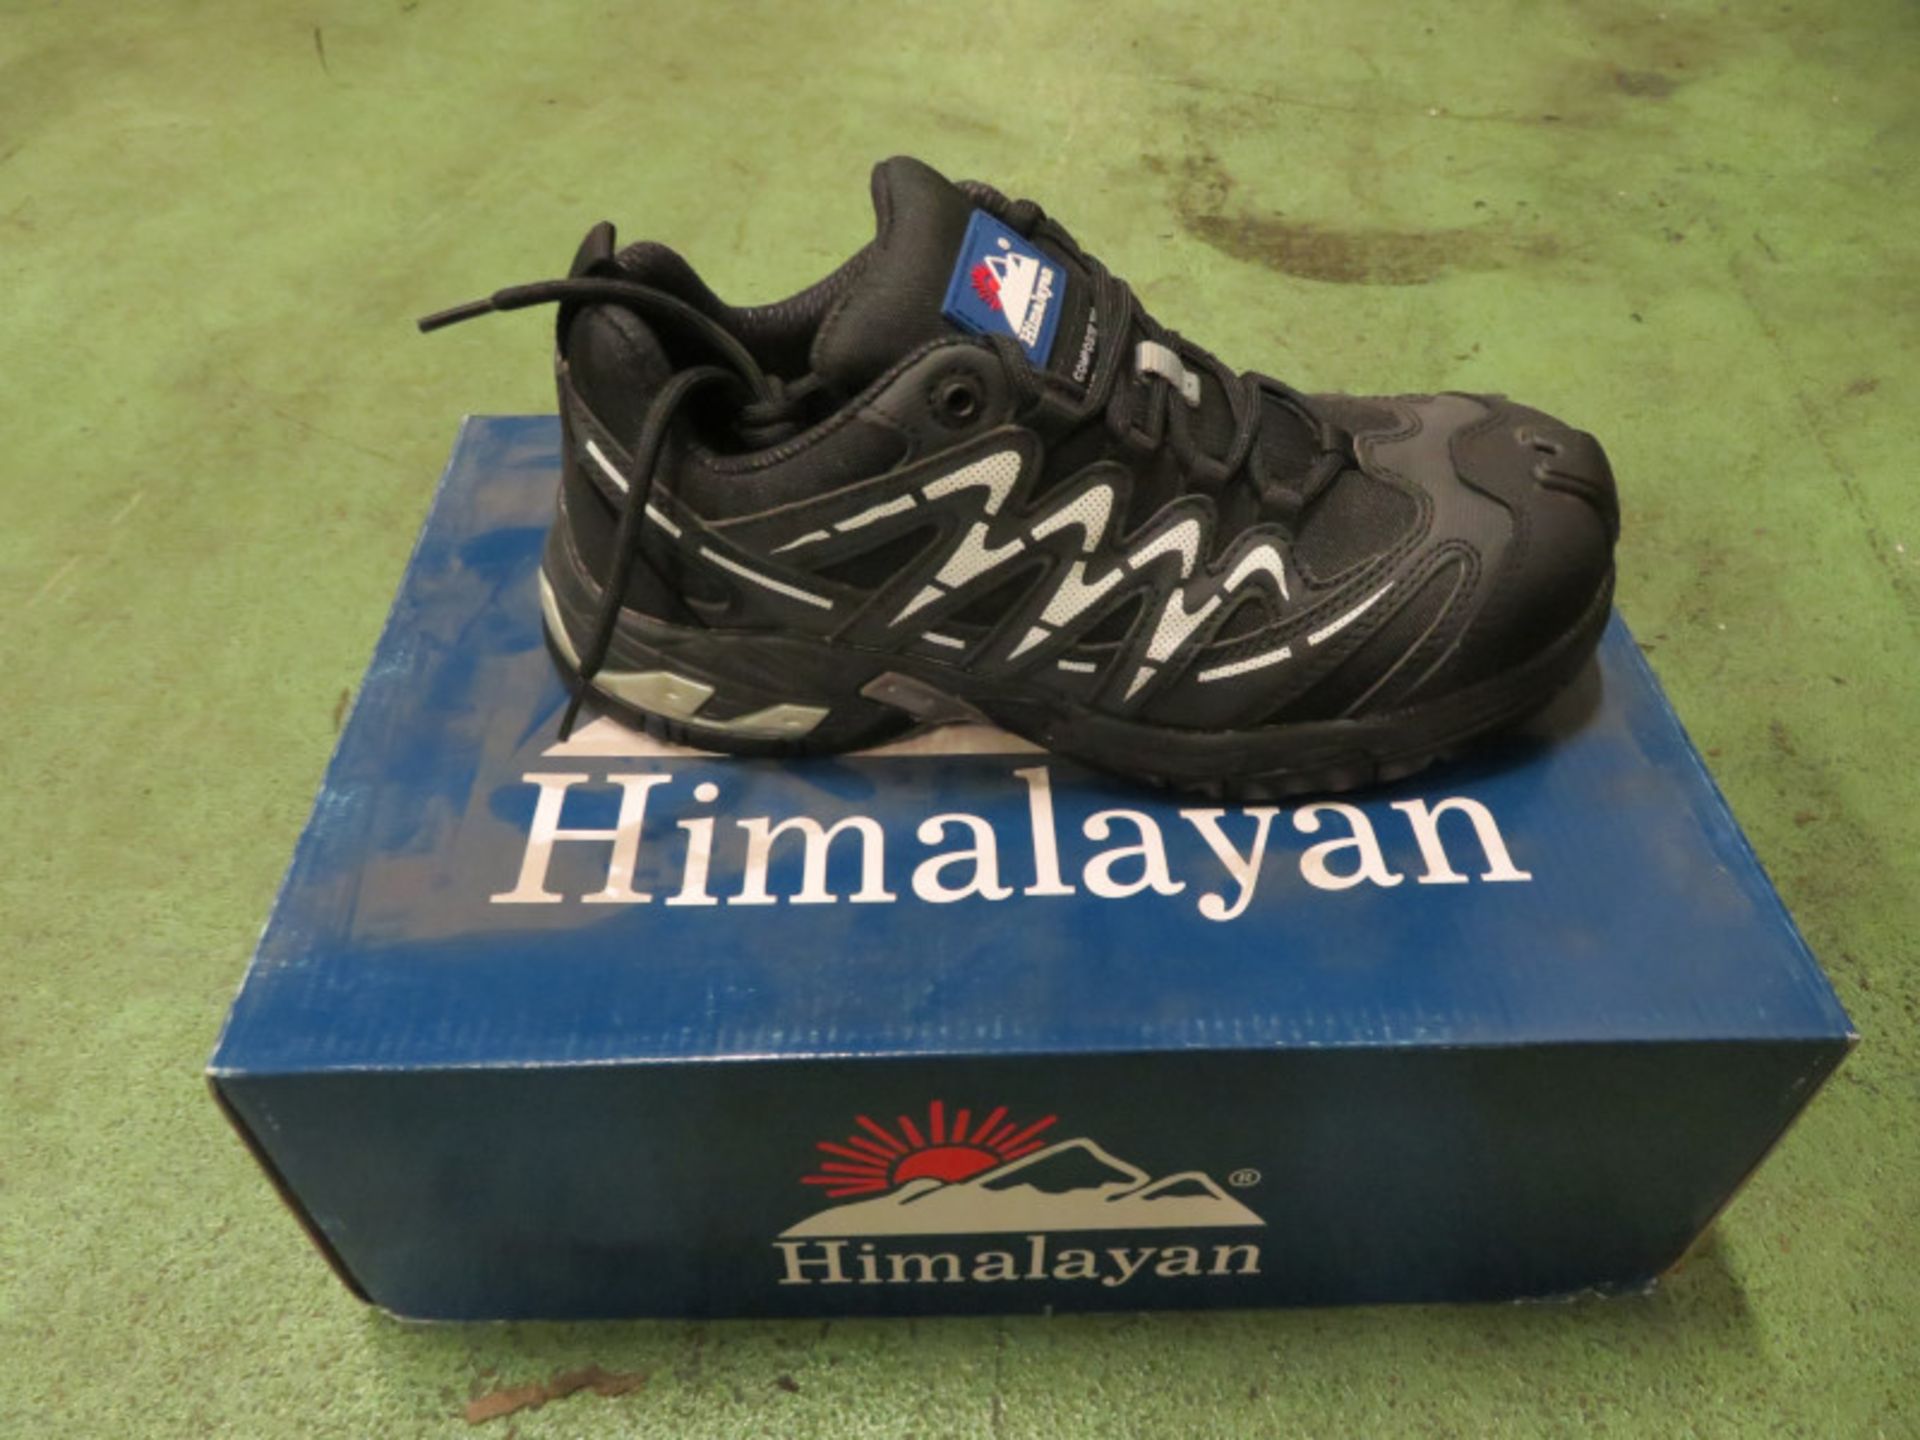 Himalayan saftey shoe - style 4034 - 6UK